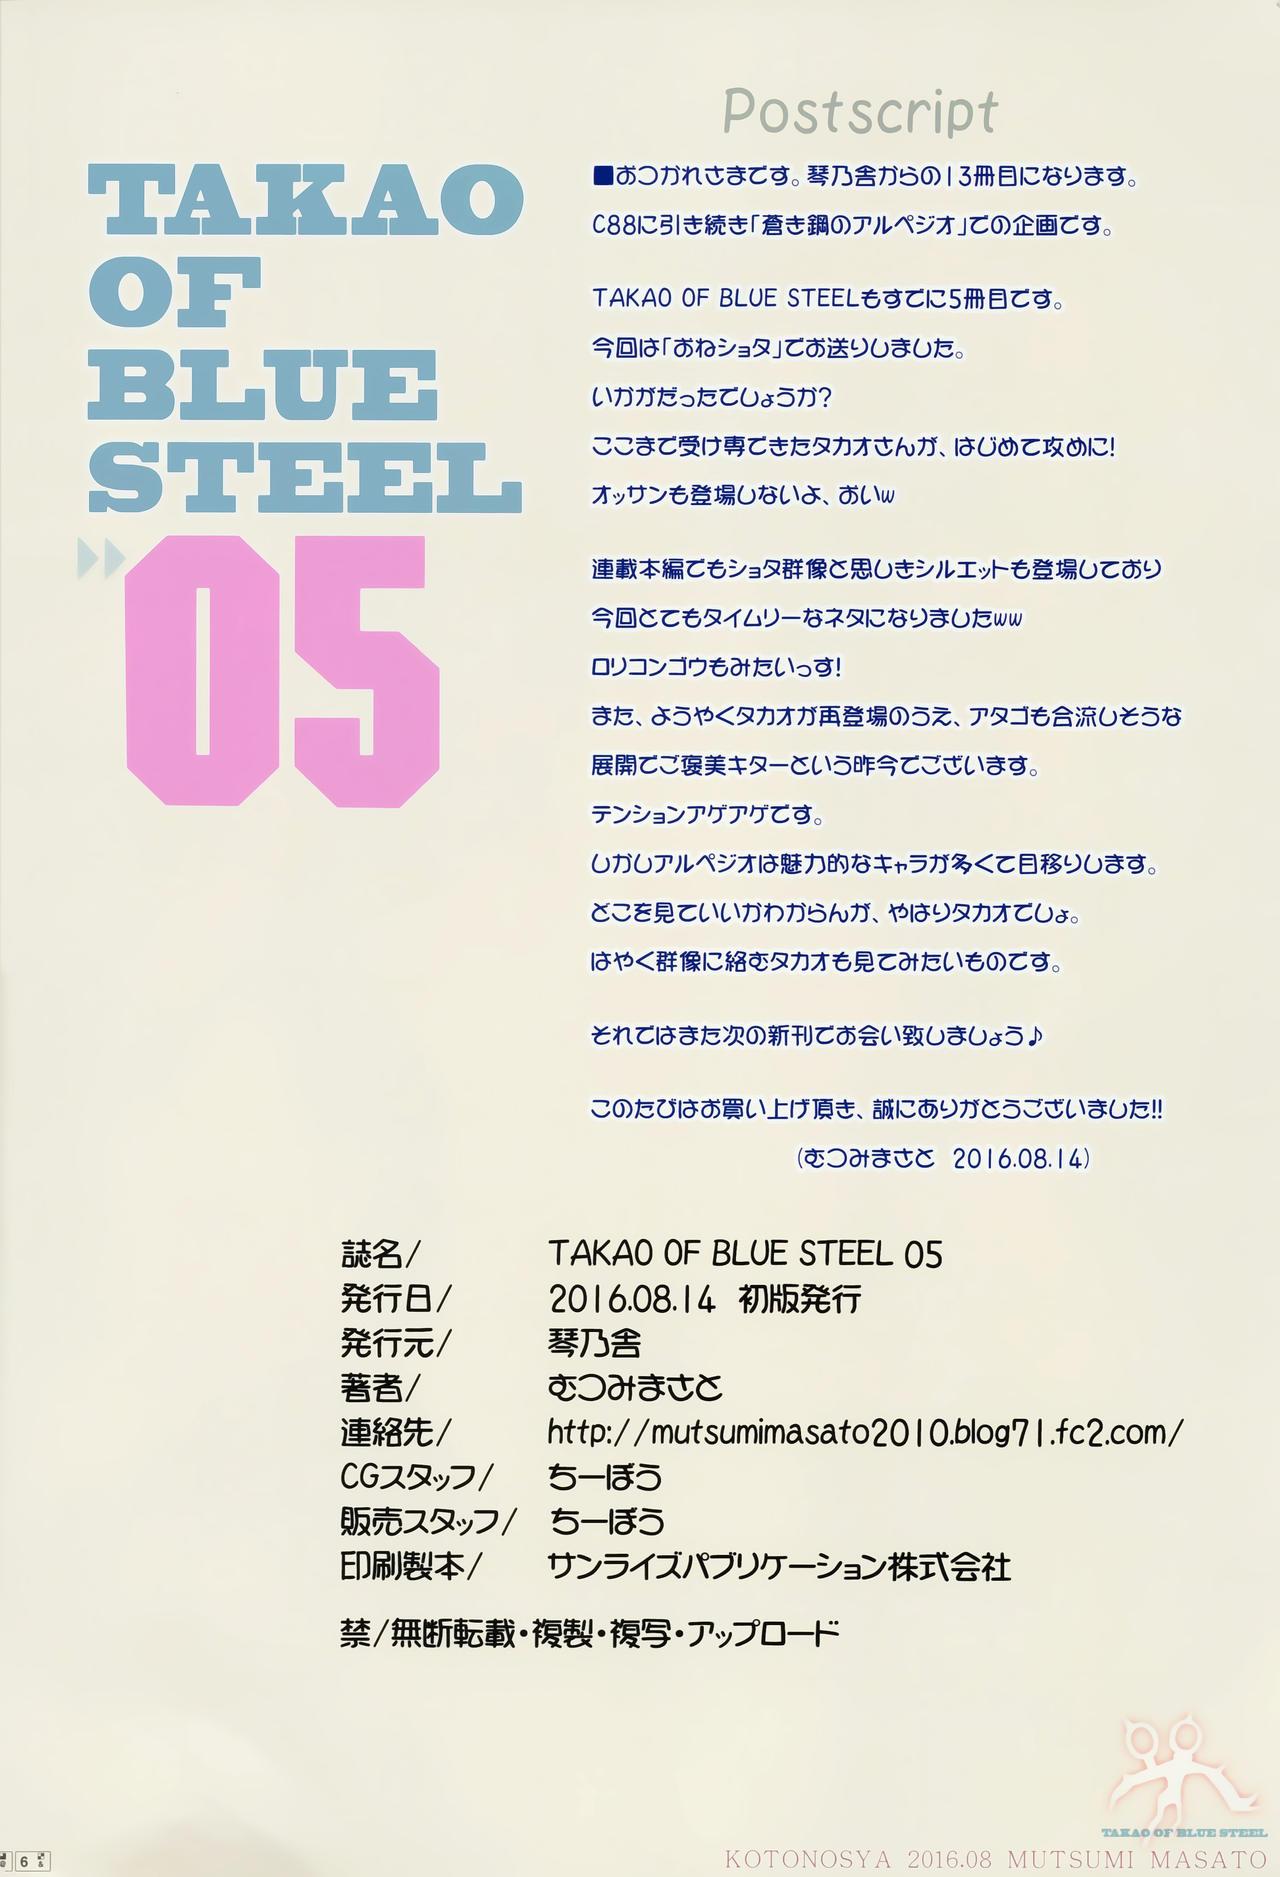 TAKAO OF BLUE STEEL 05 25